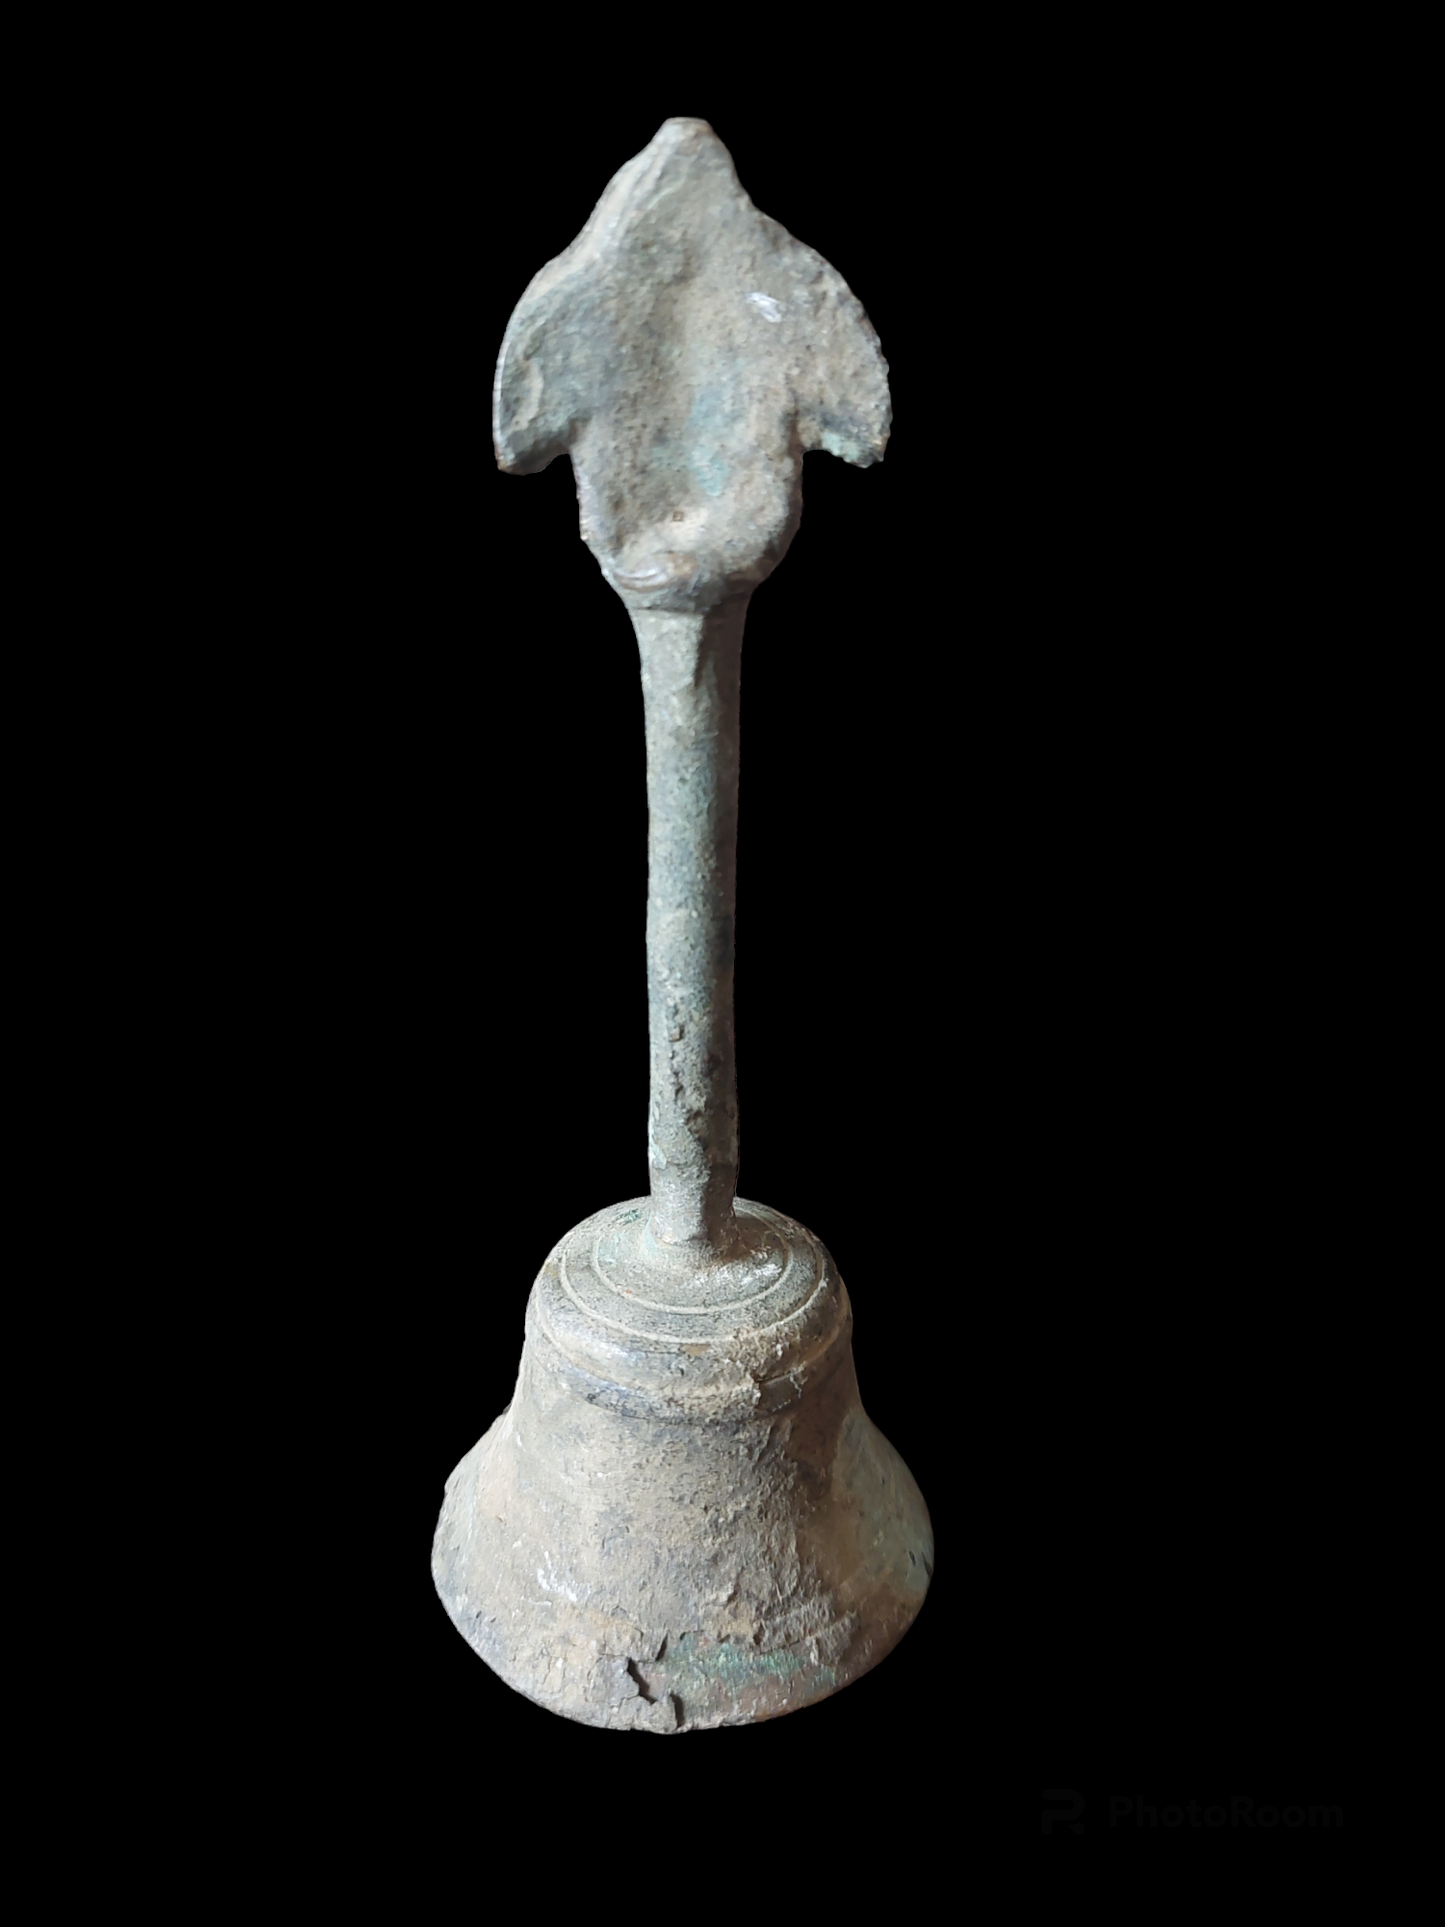 Antique bronze altar bell with garuda